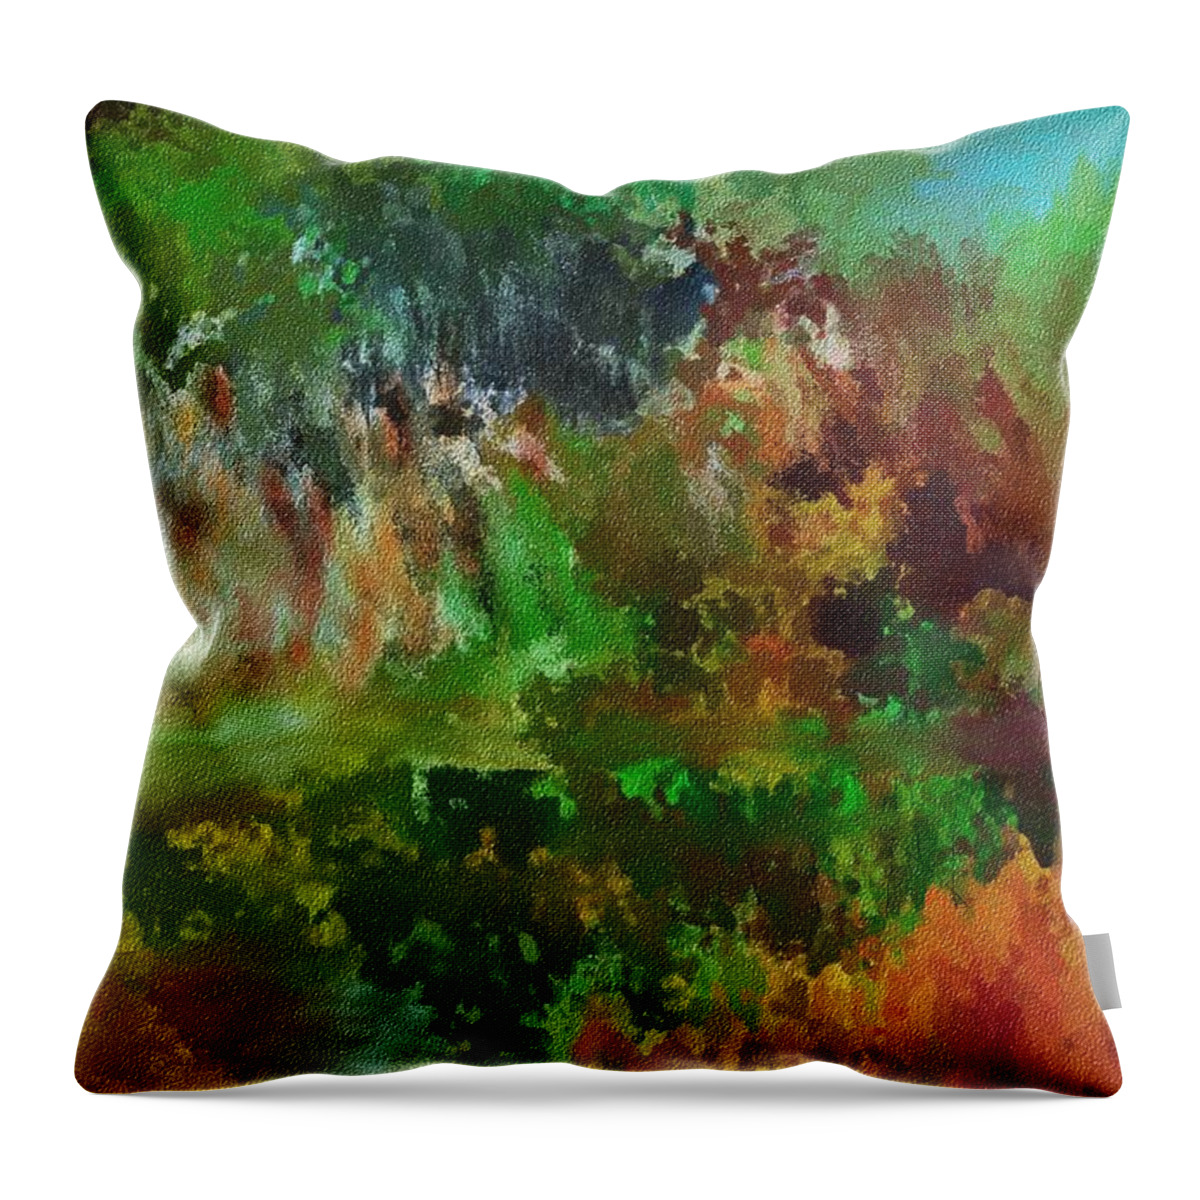 Landscape Throw Pillow featuring the digital art Autumn Woods 122711 by David Lane